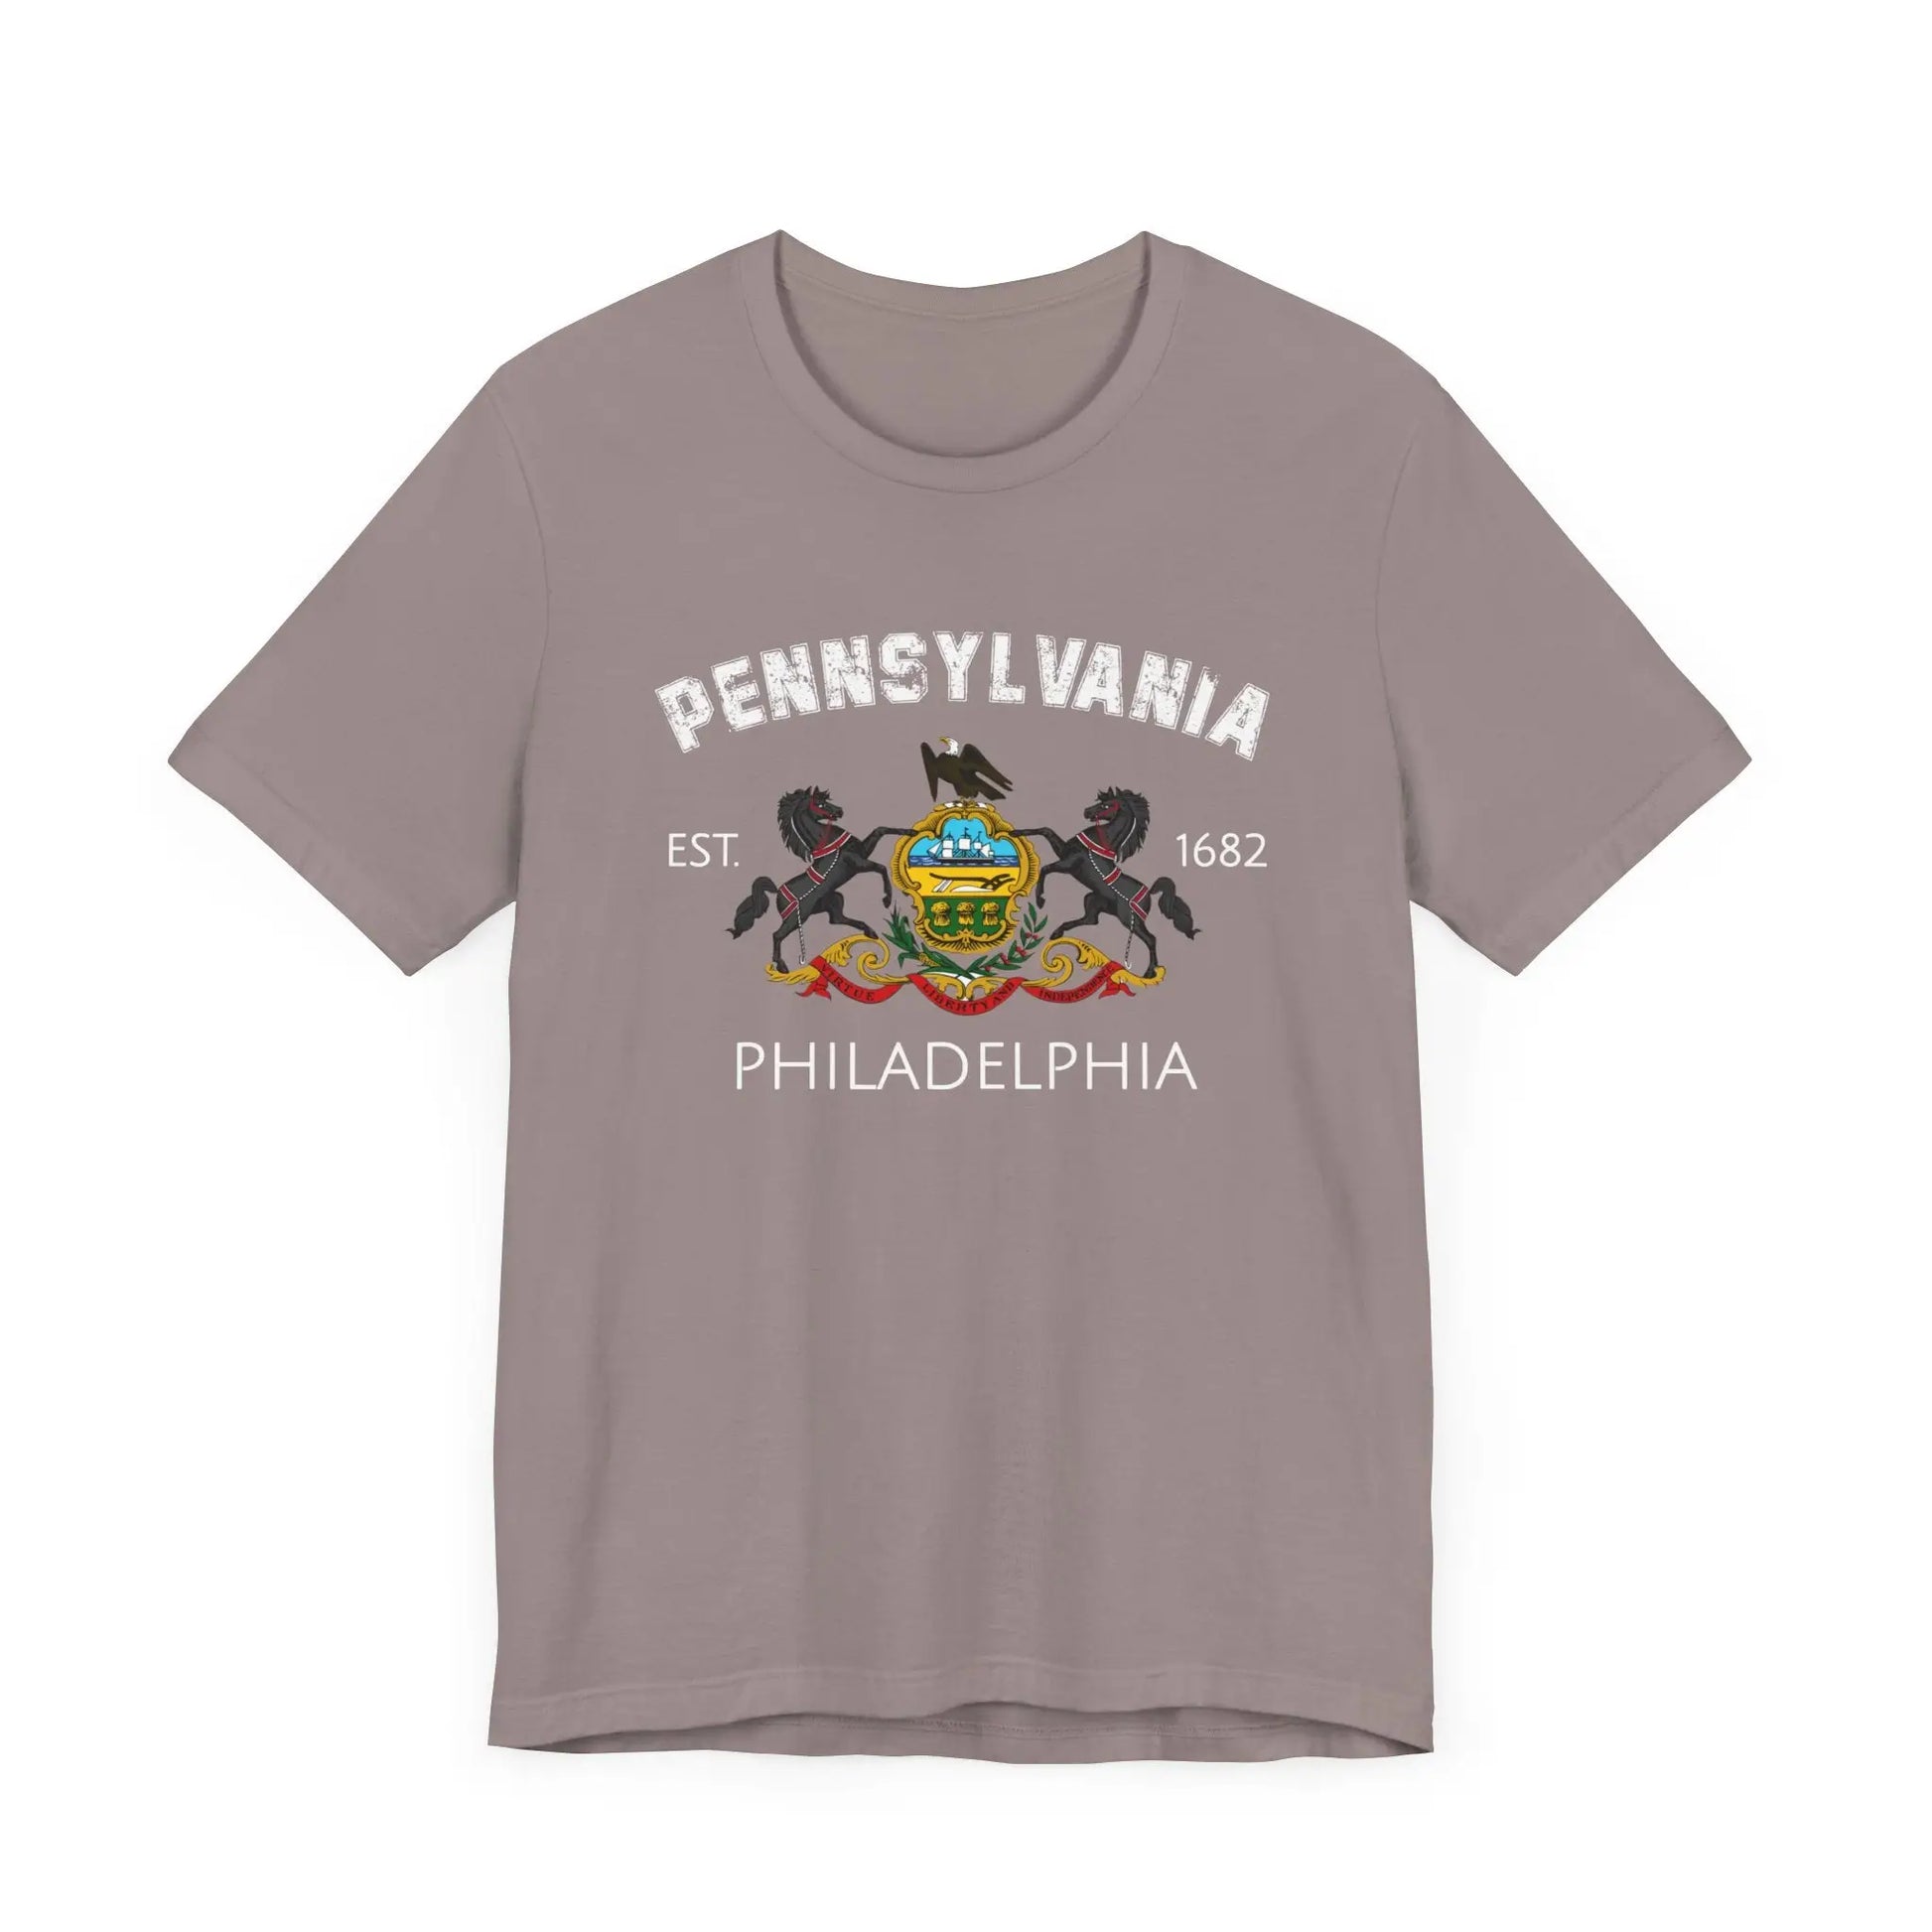 Philadelphia Pennsylvania Est 1682 Men's Jersey Short Sleeve Tee - Wicked Tees